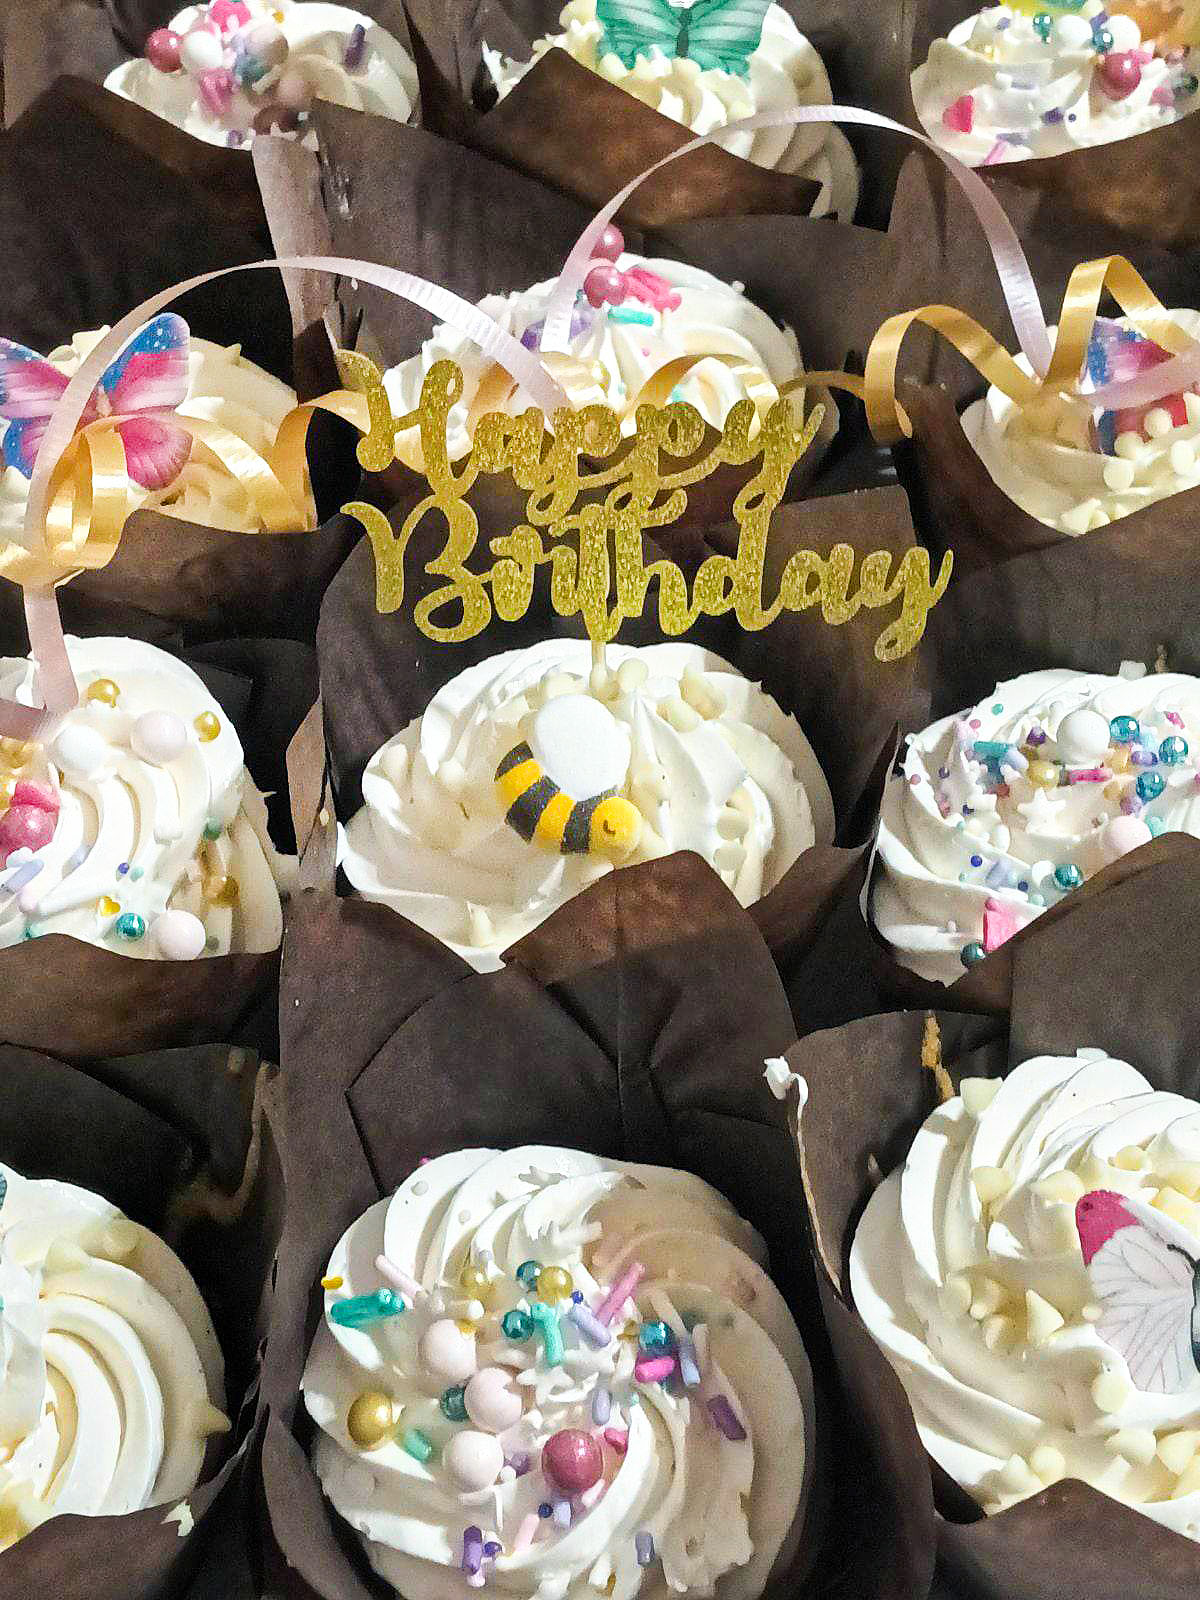 Homemade birthday cupcakes